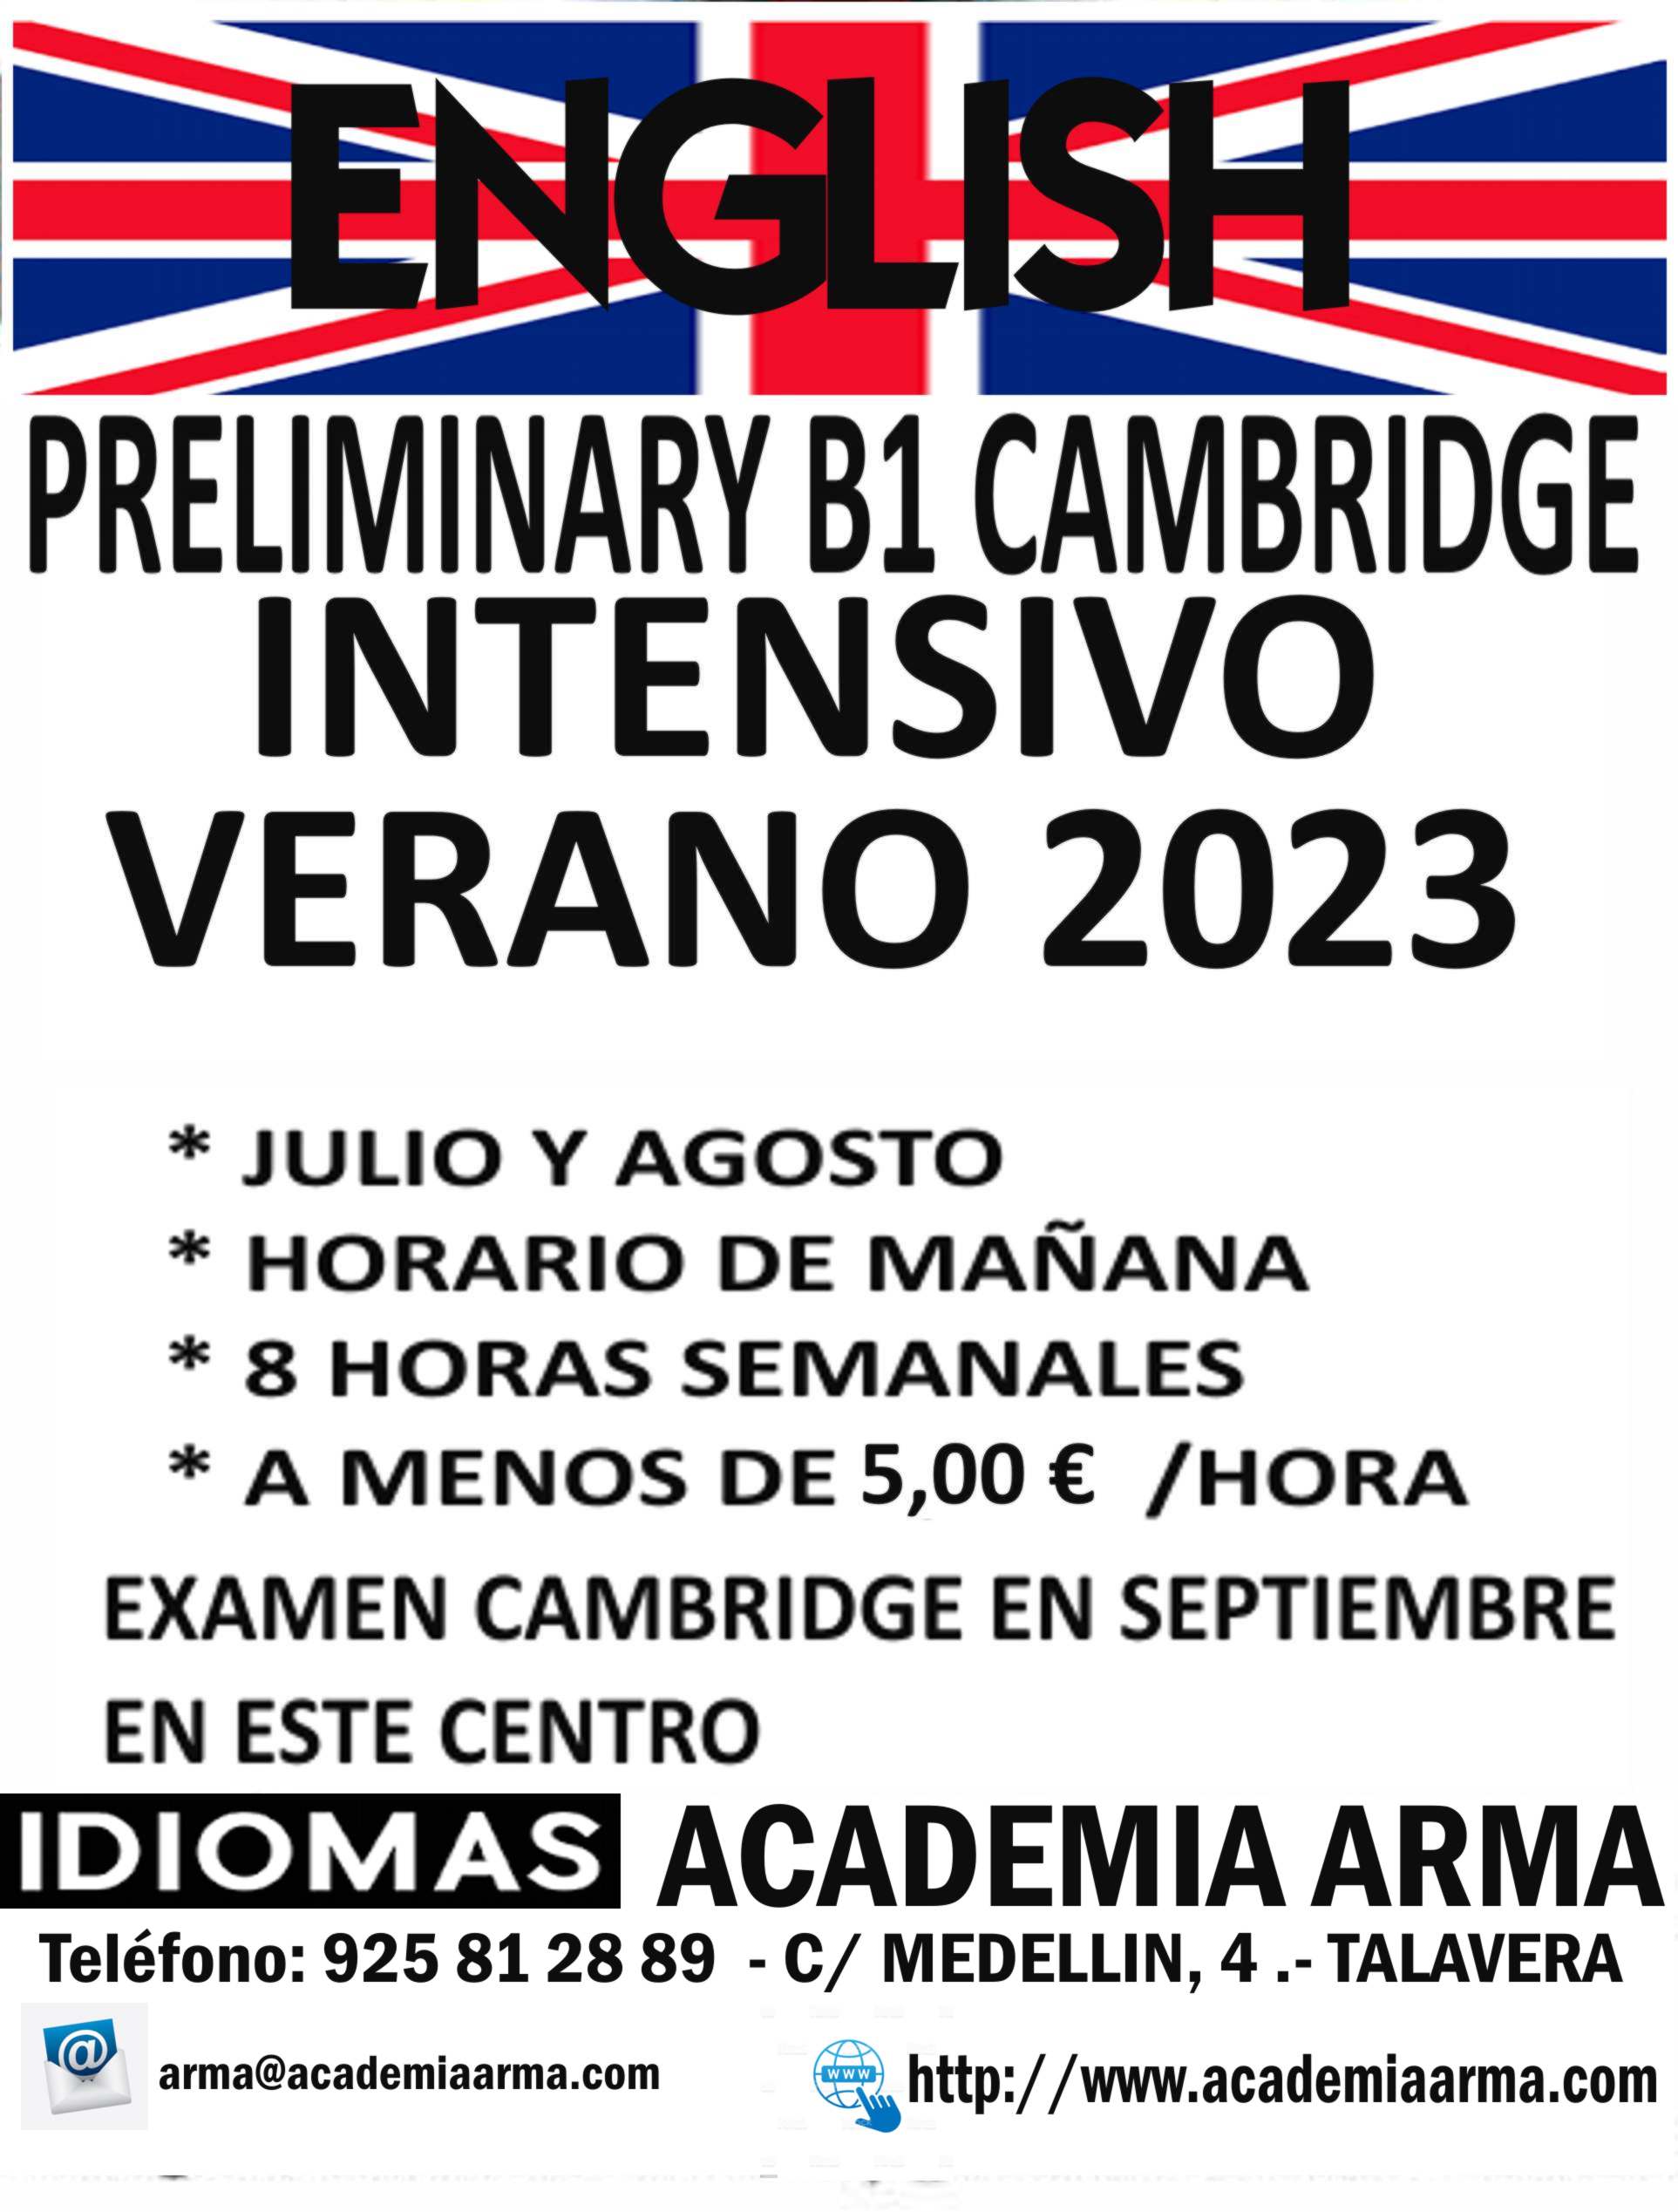 B1 INTENSIVO VERANO 2023 - Formación